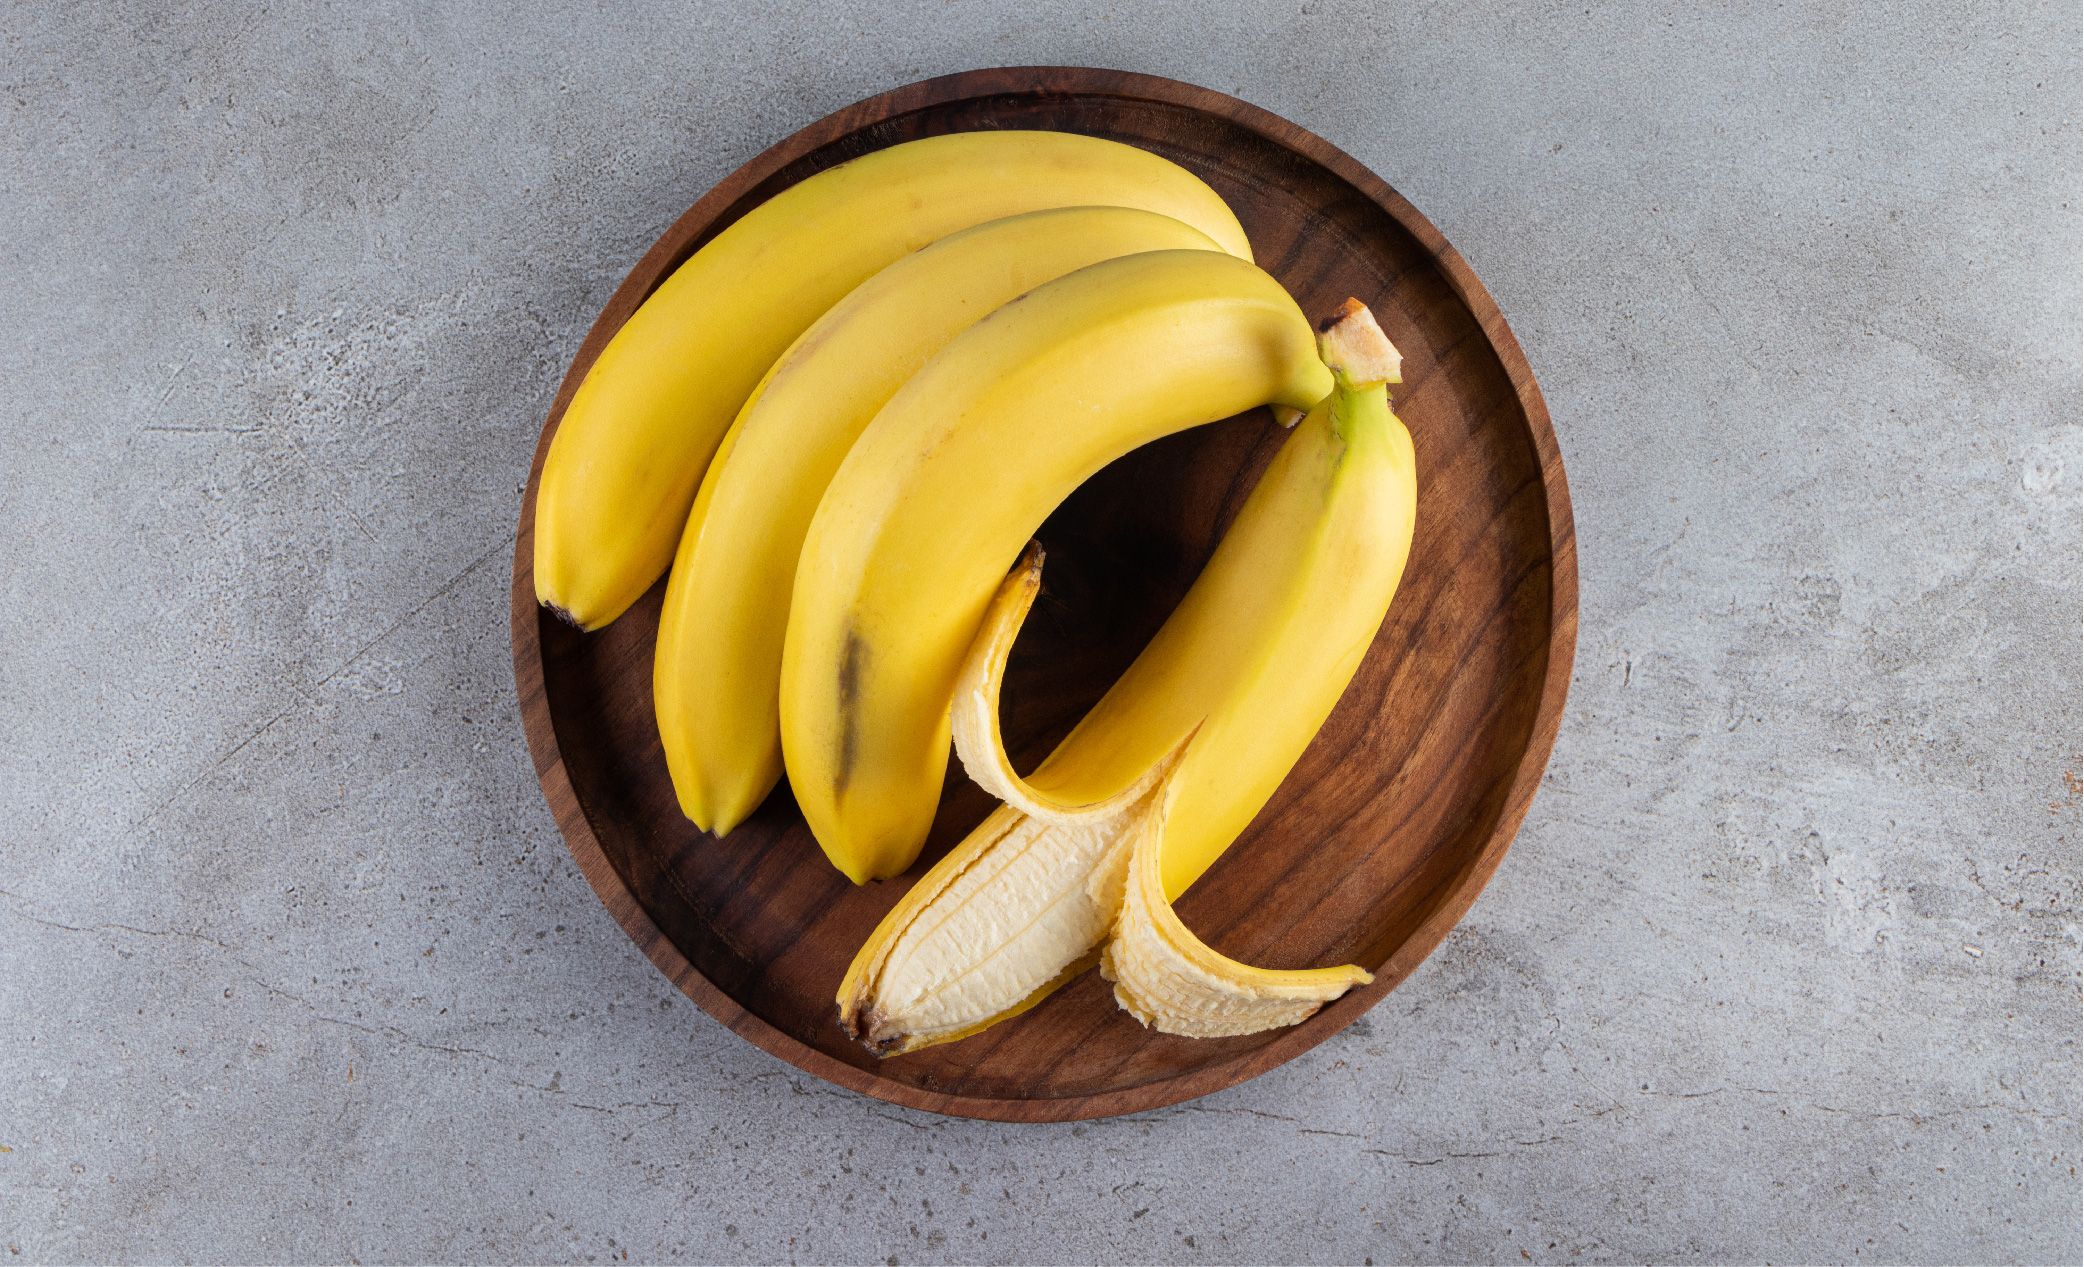  high fiber foods - banana